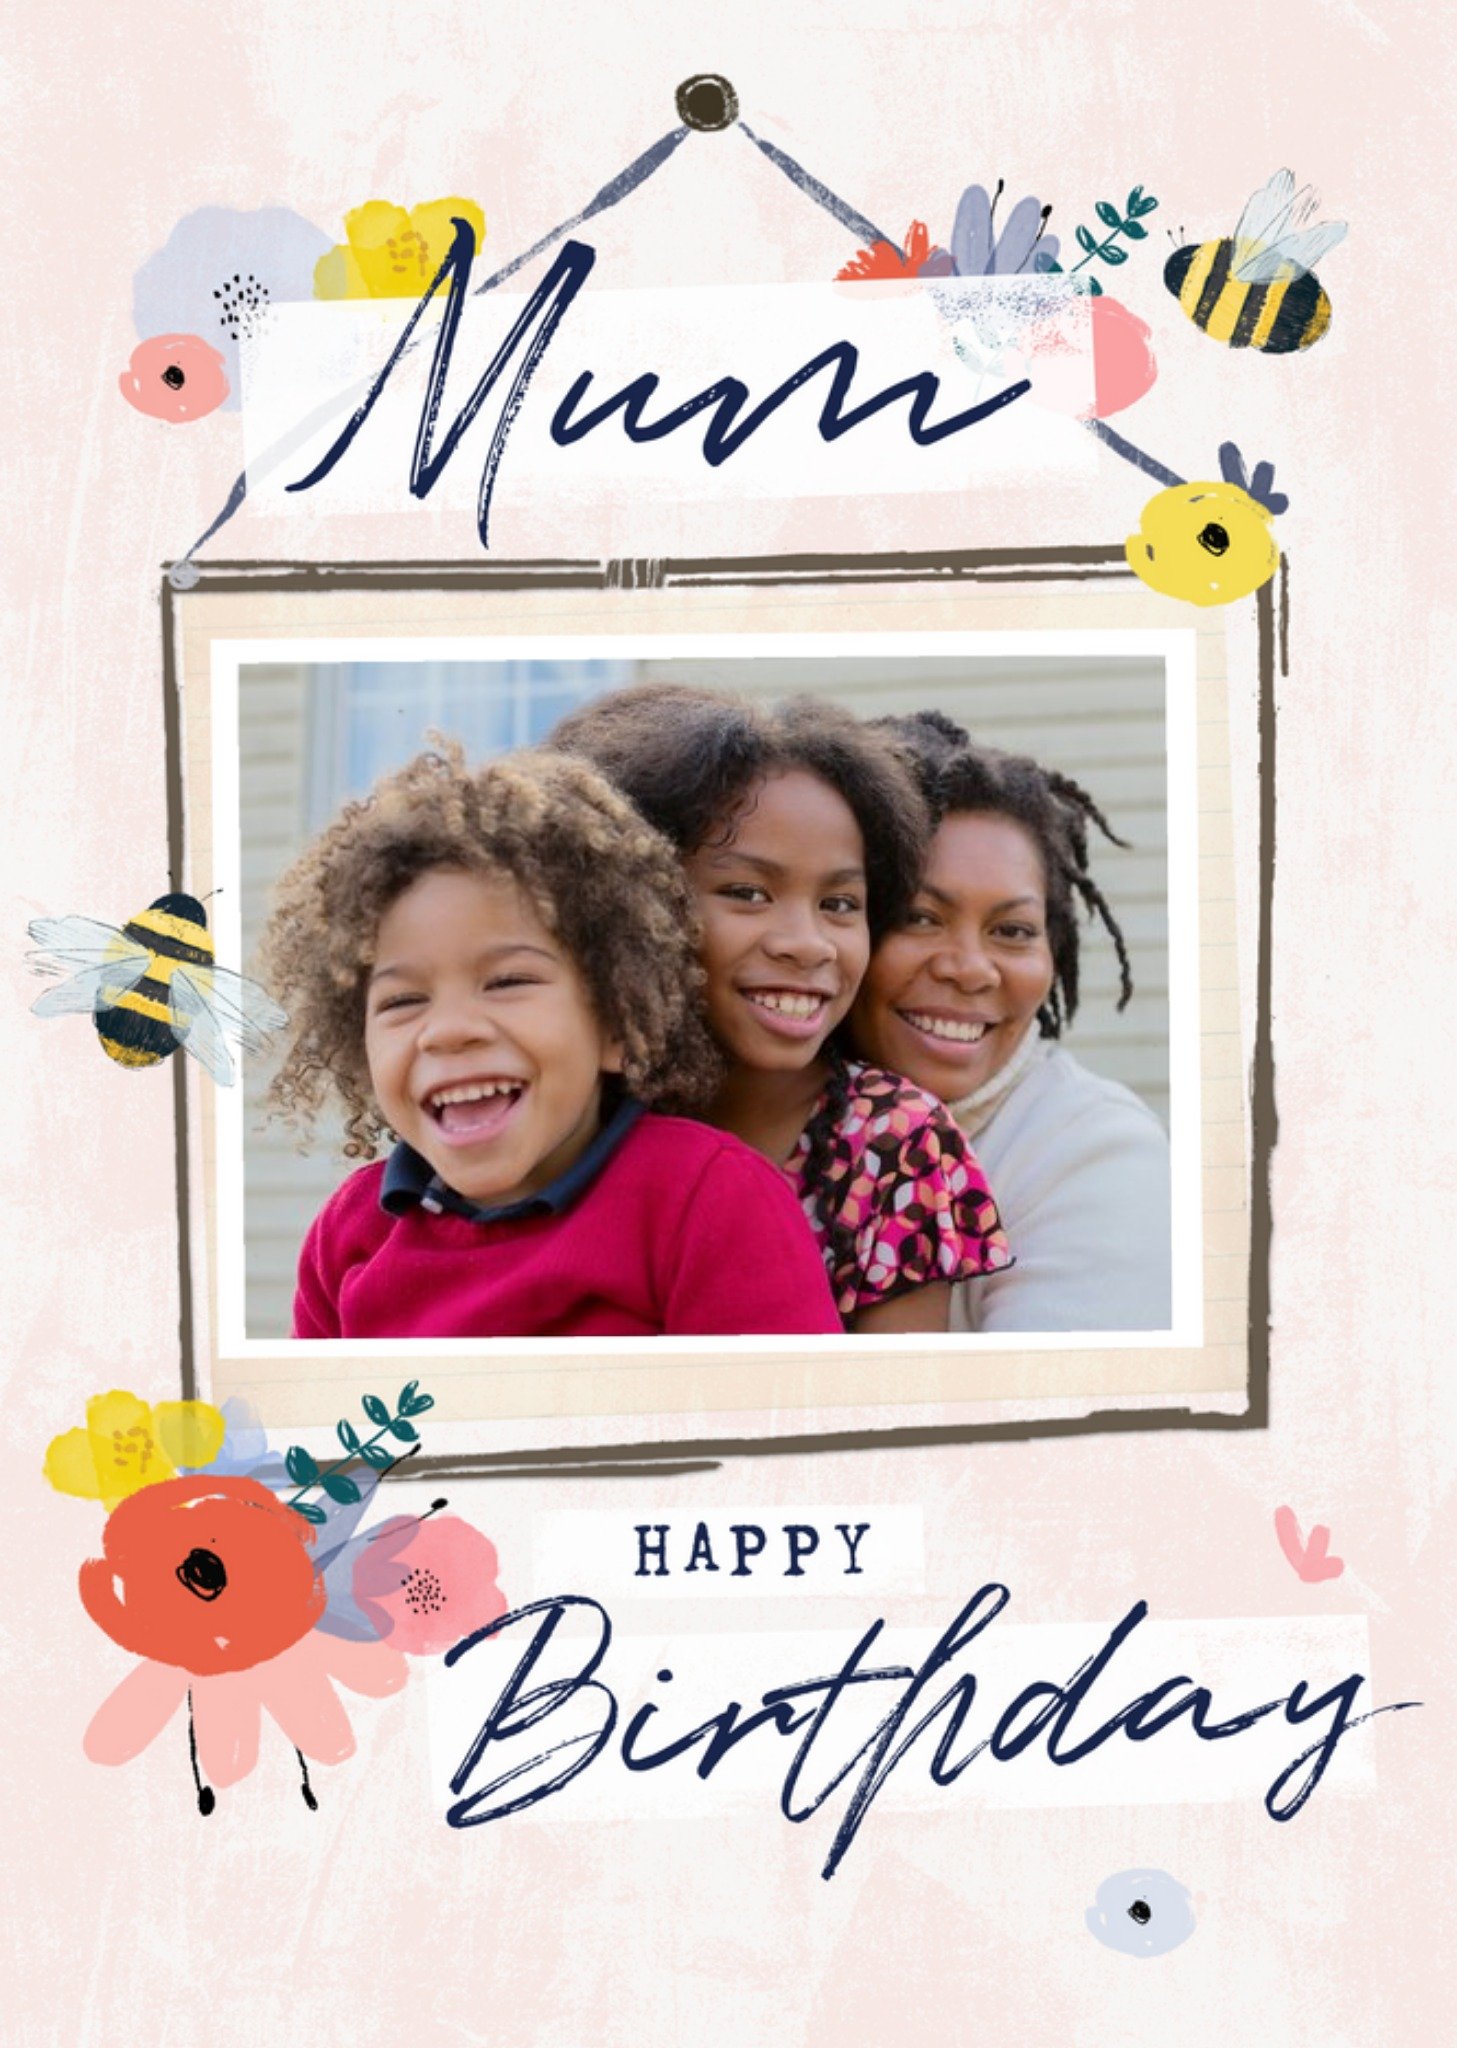 Moonpig Bees Knees Floral Bees Happy Birthday Mum Photo Upload Birthday Card, Large